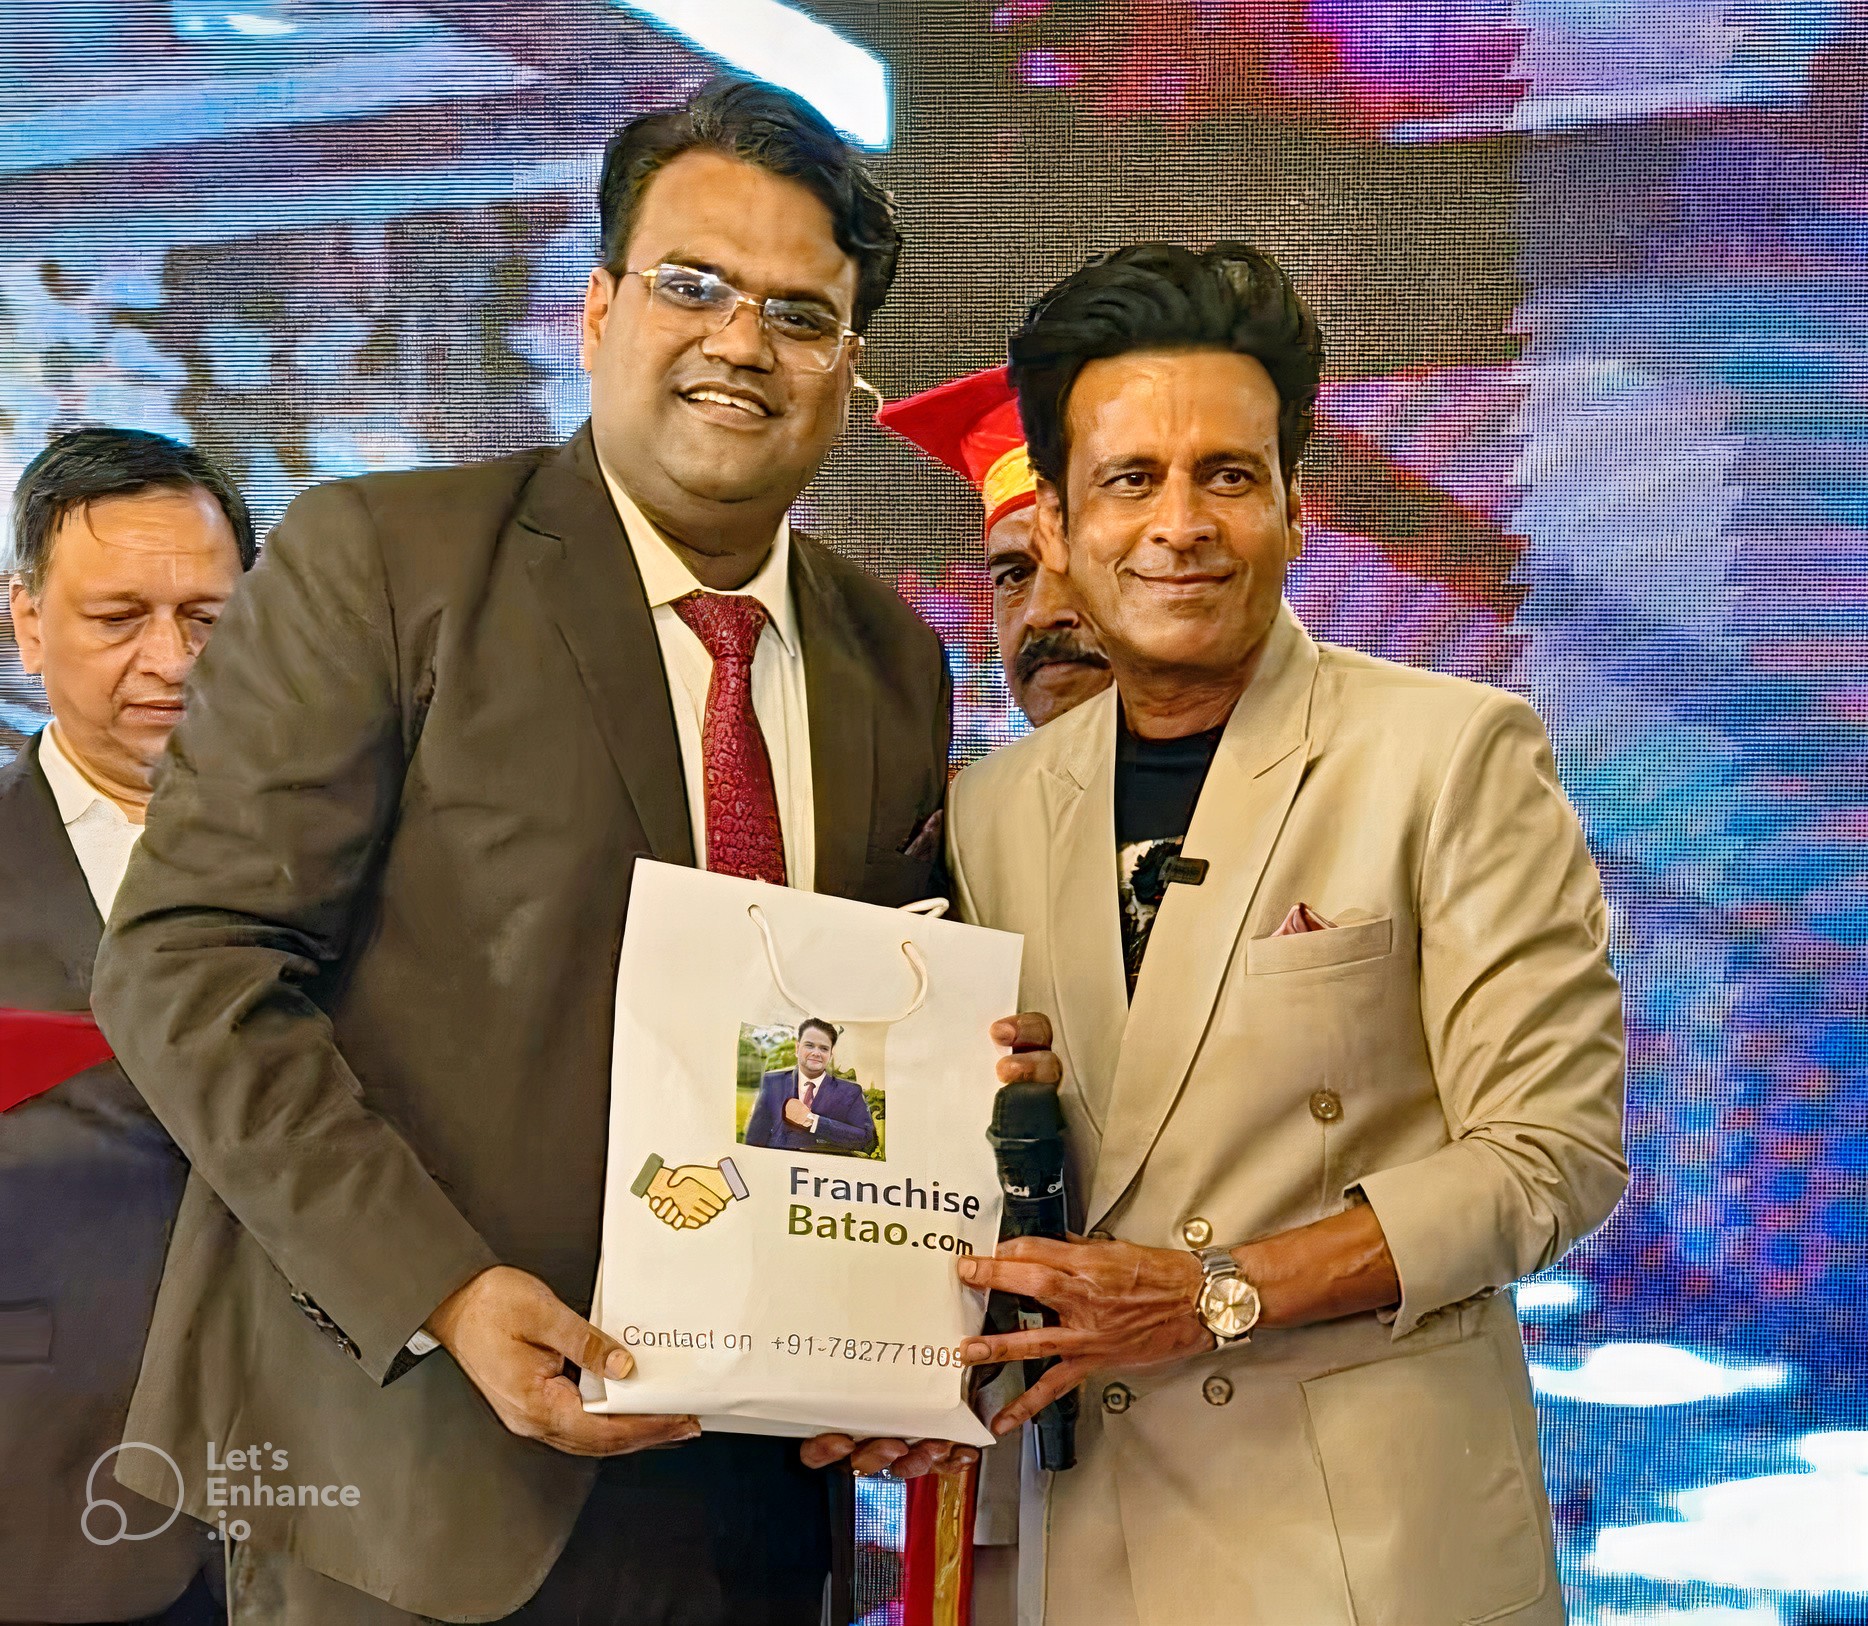 Franchise Batao Business Icon Award in Mumbai